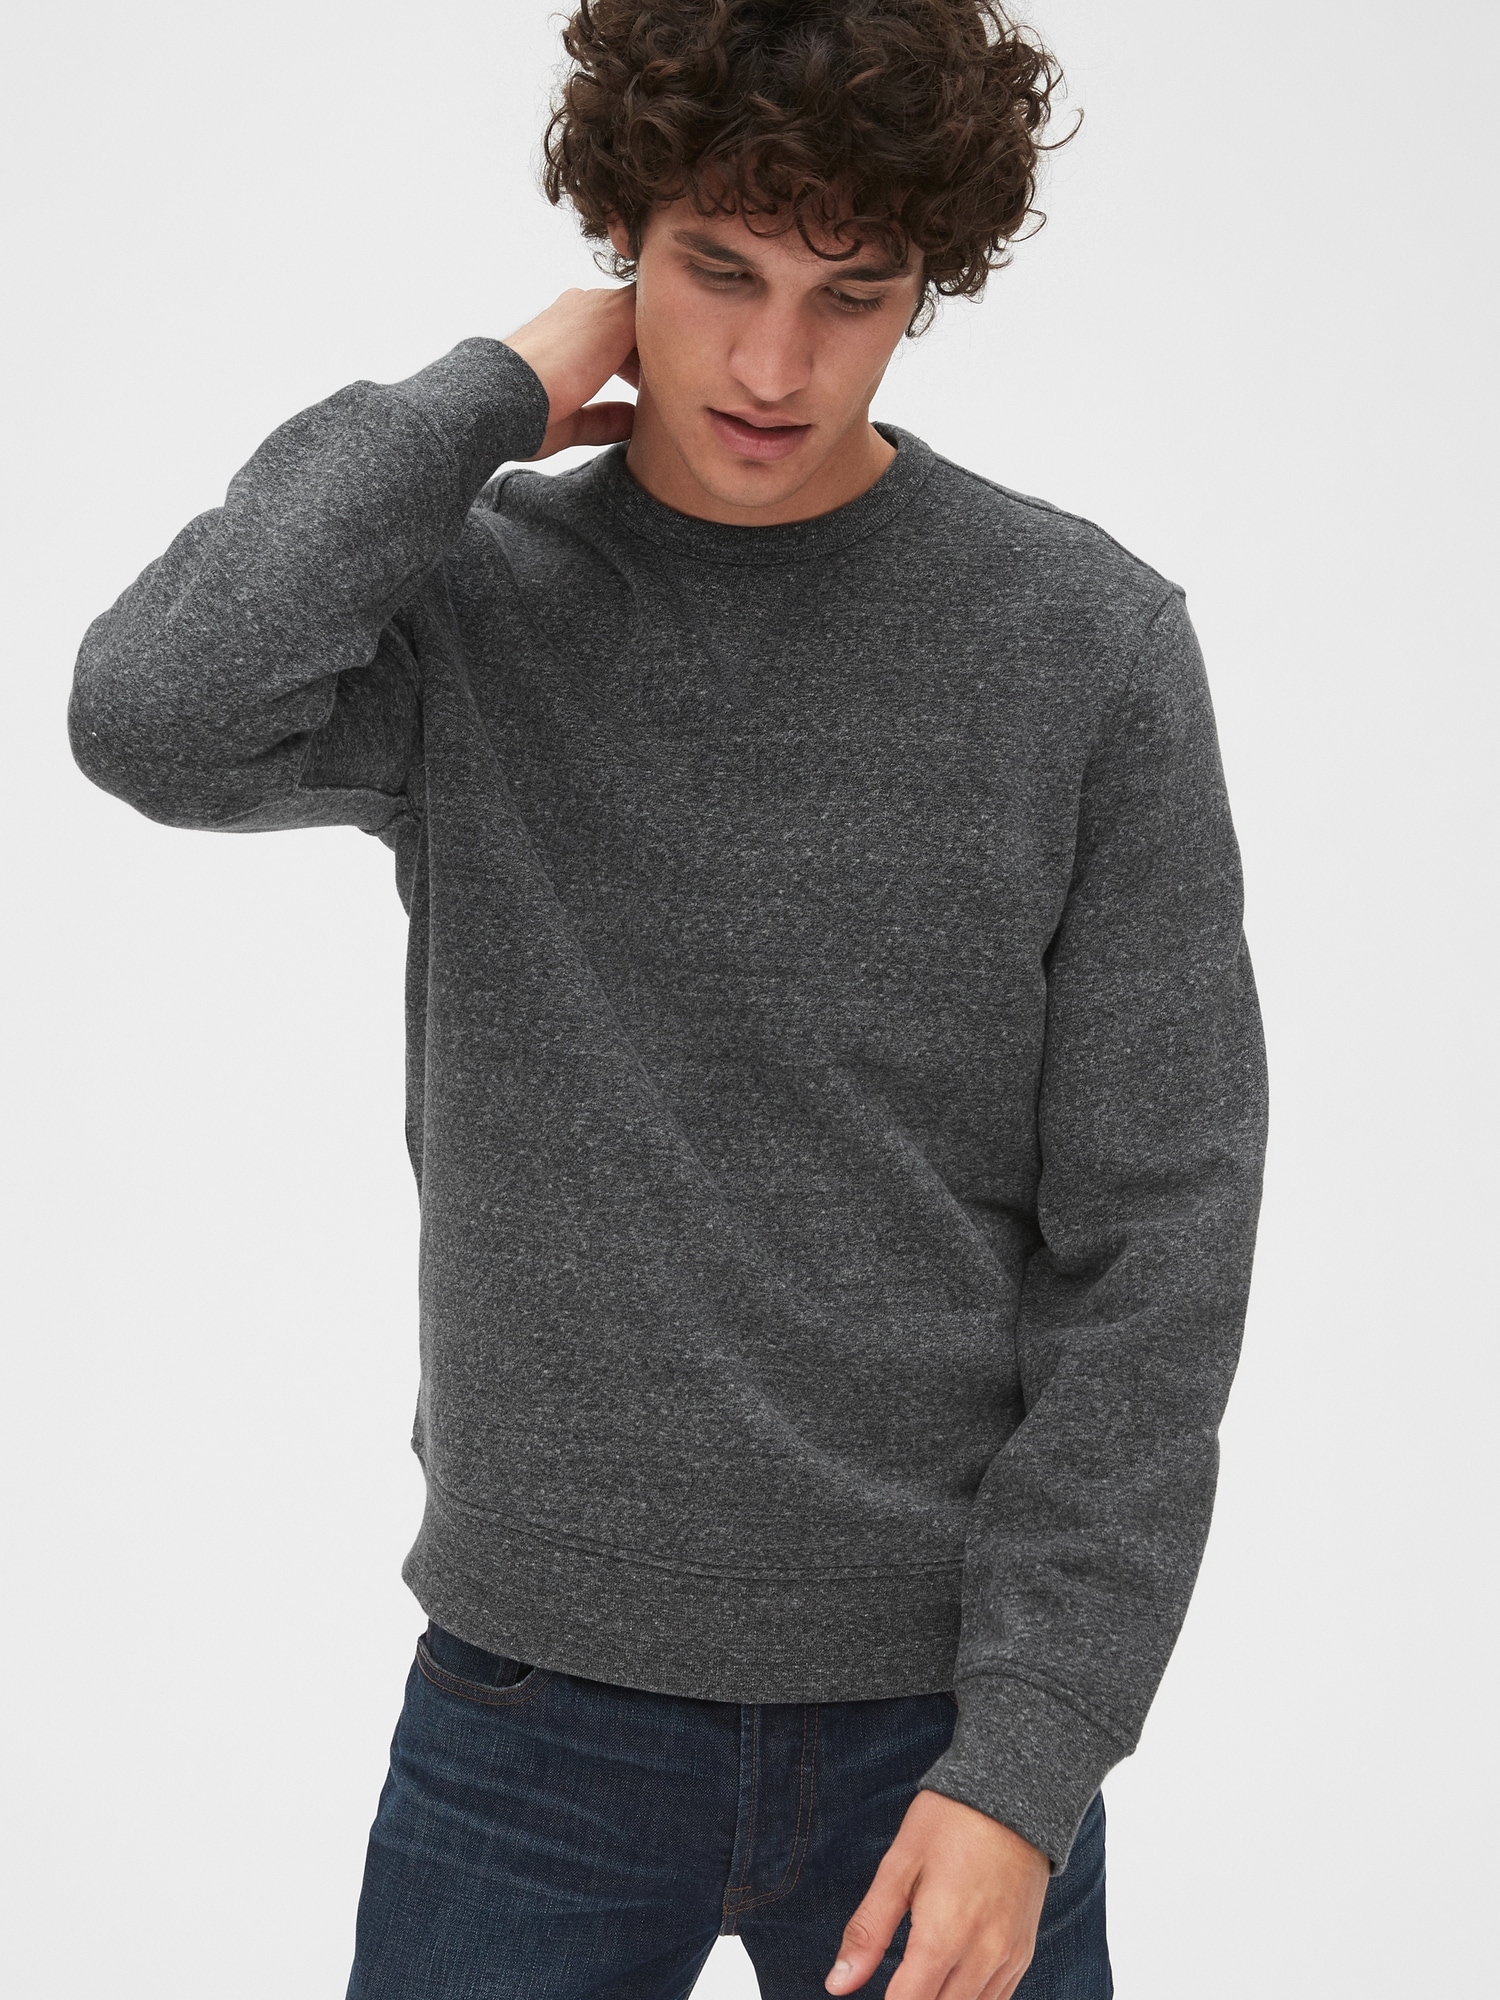 Men's Vintage Soft Crewneck Sweatshirt by Gap Beige Size XL